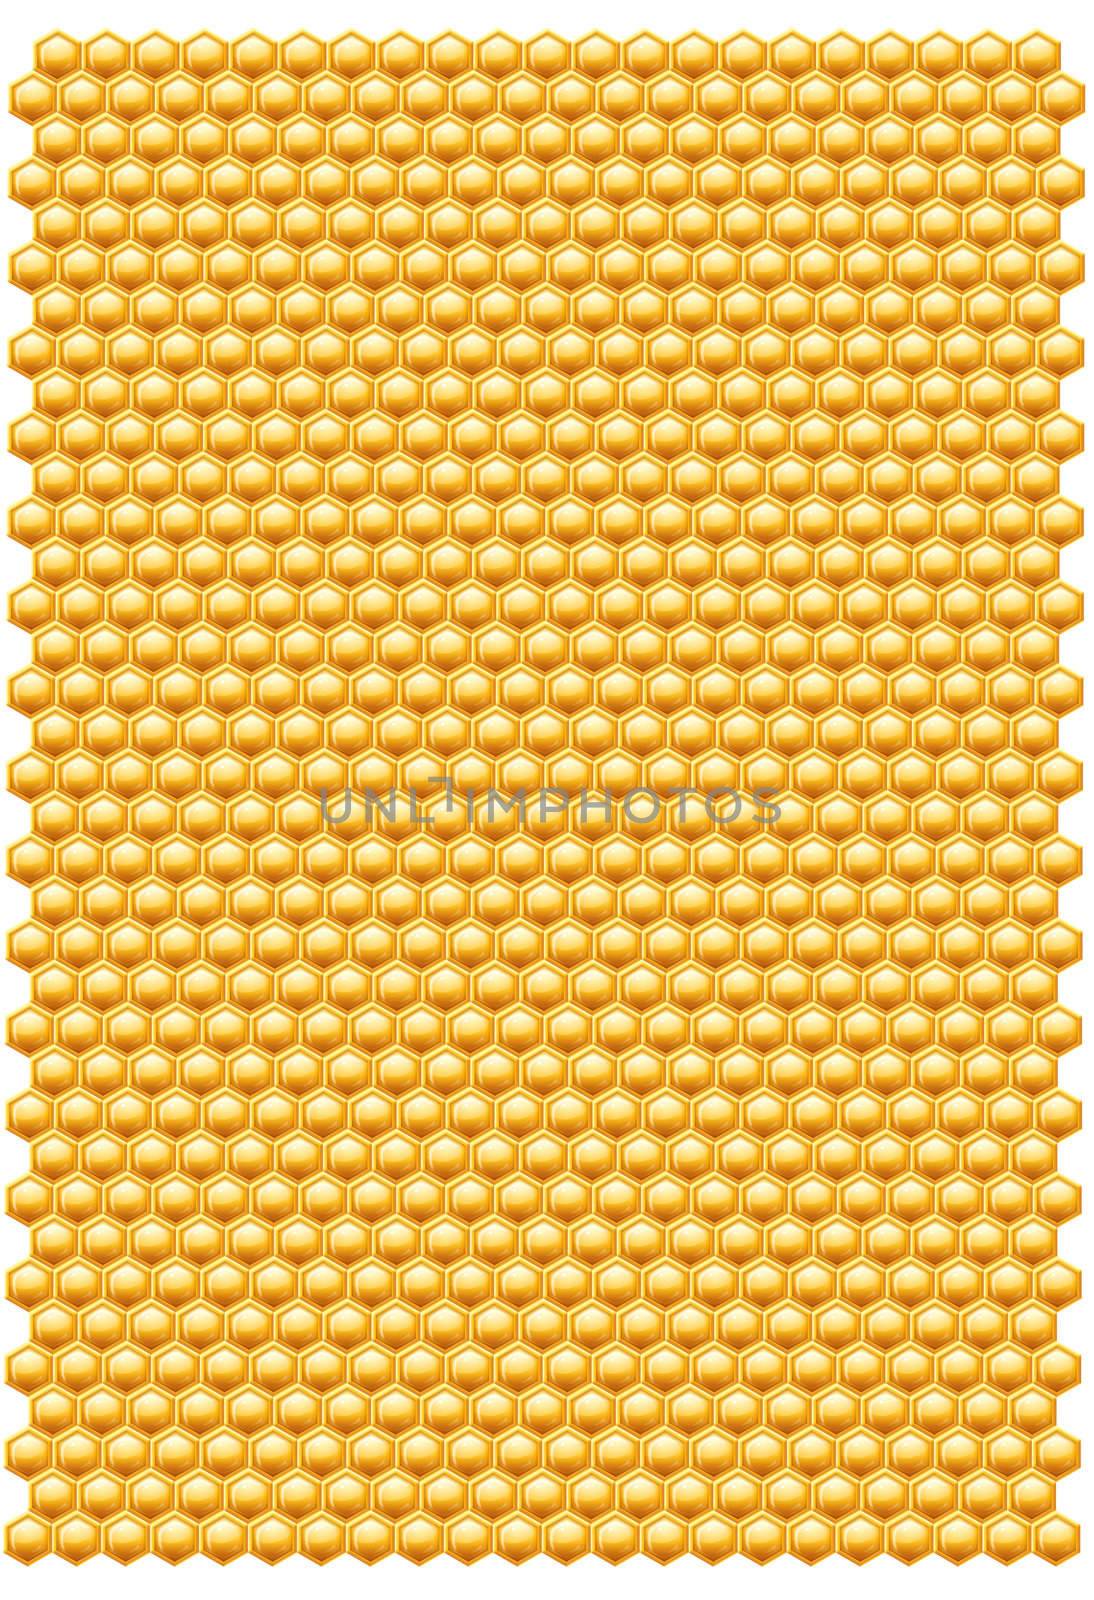 Bee honeycombs pattern by igor_stramyk